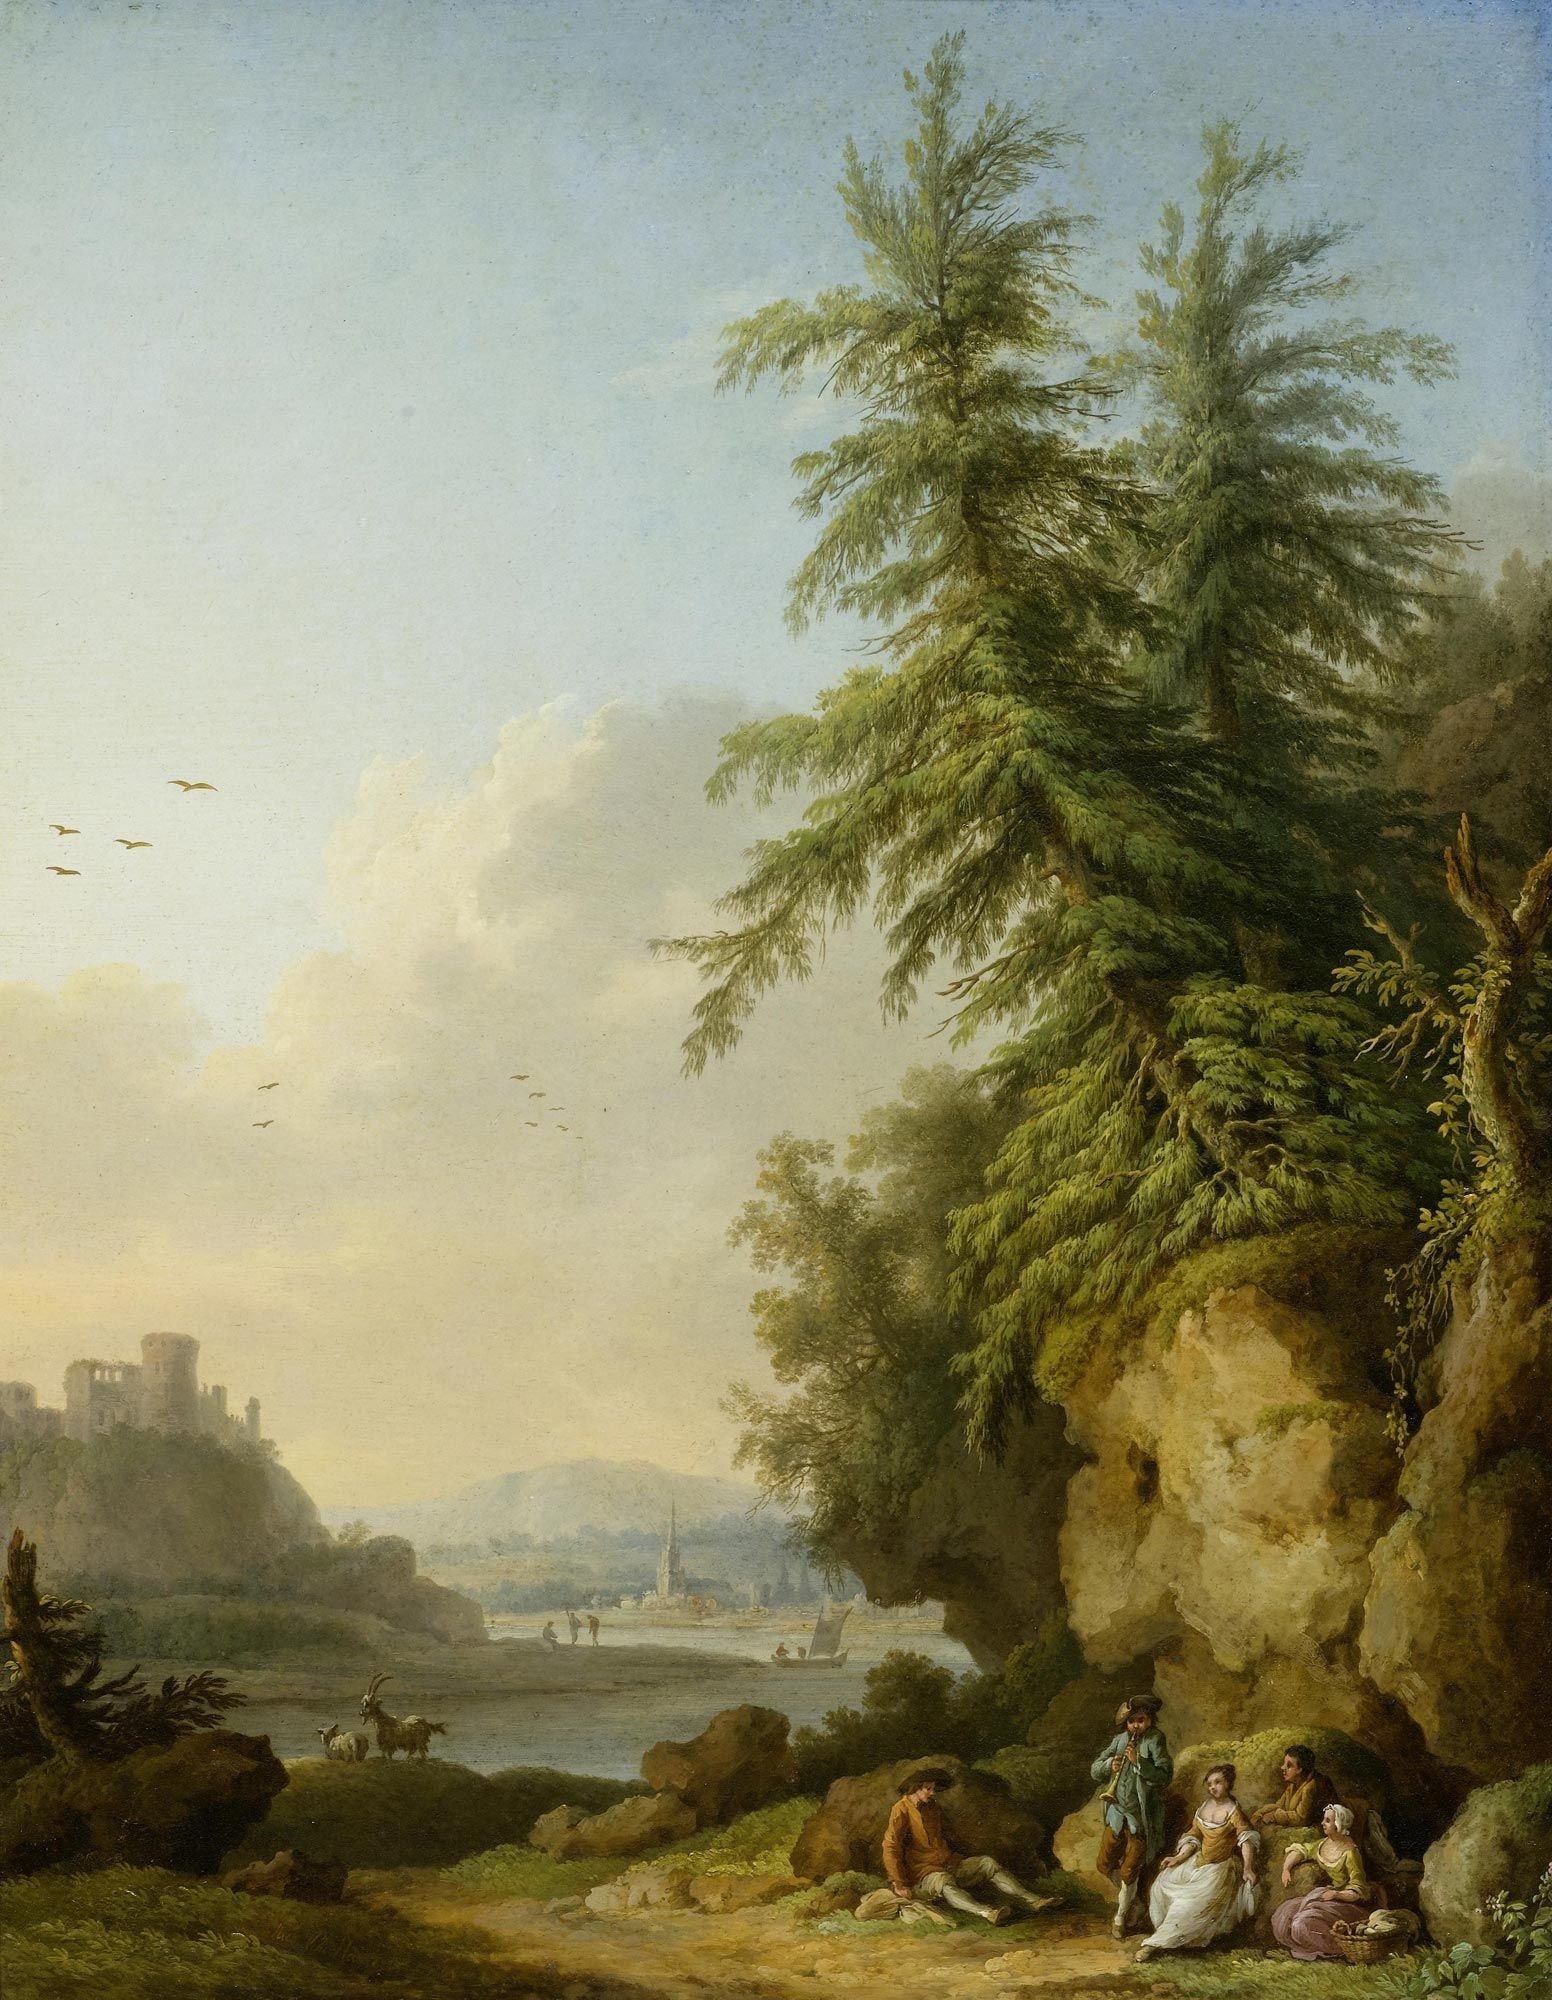 Jacob Philipp Hackert - Blick auf Ruinen an einem Fluss (1767)